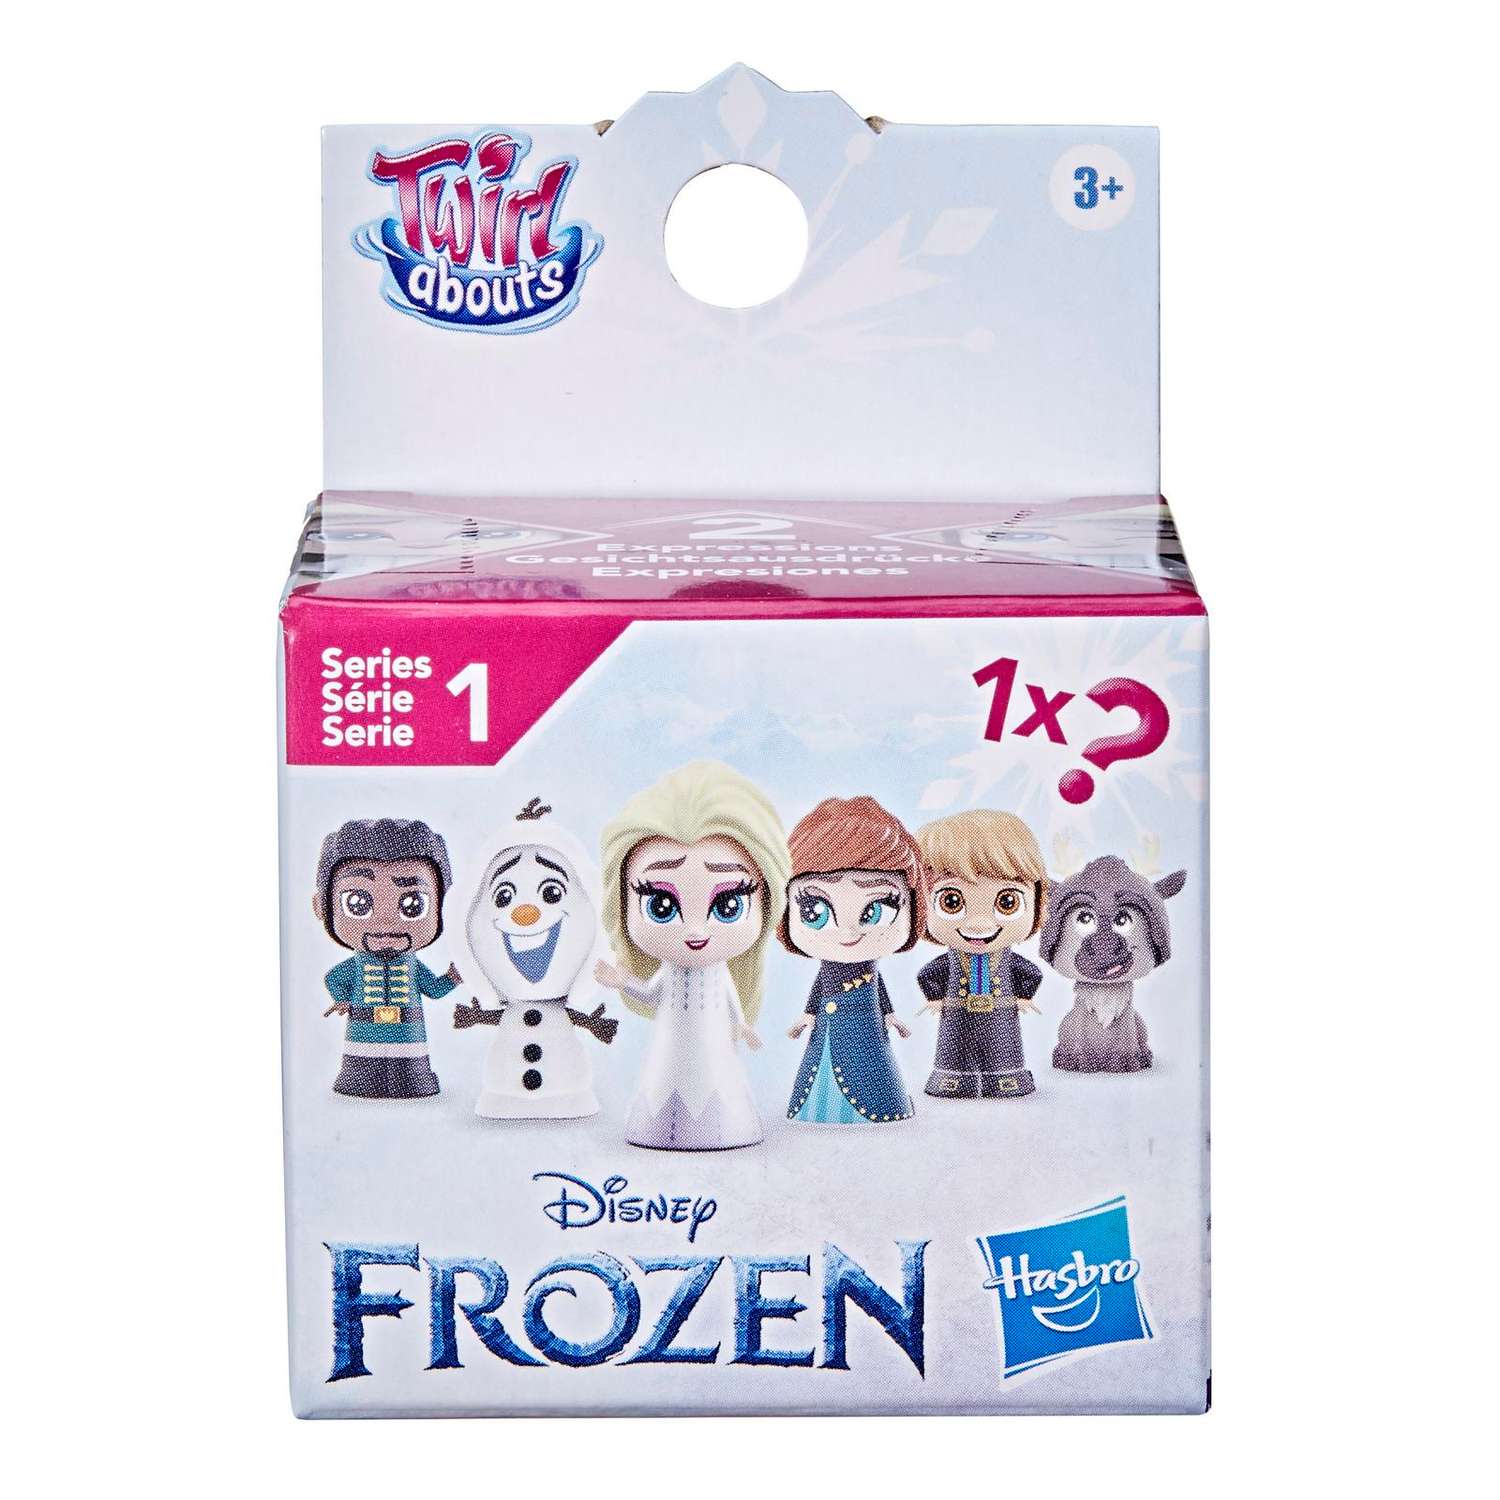 Фигурка Disney Frozen Холодное сердце Twirlabouts в непрозрачной упаковке (Сюрприз) F1820EU4 - фото 1